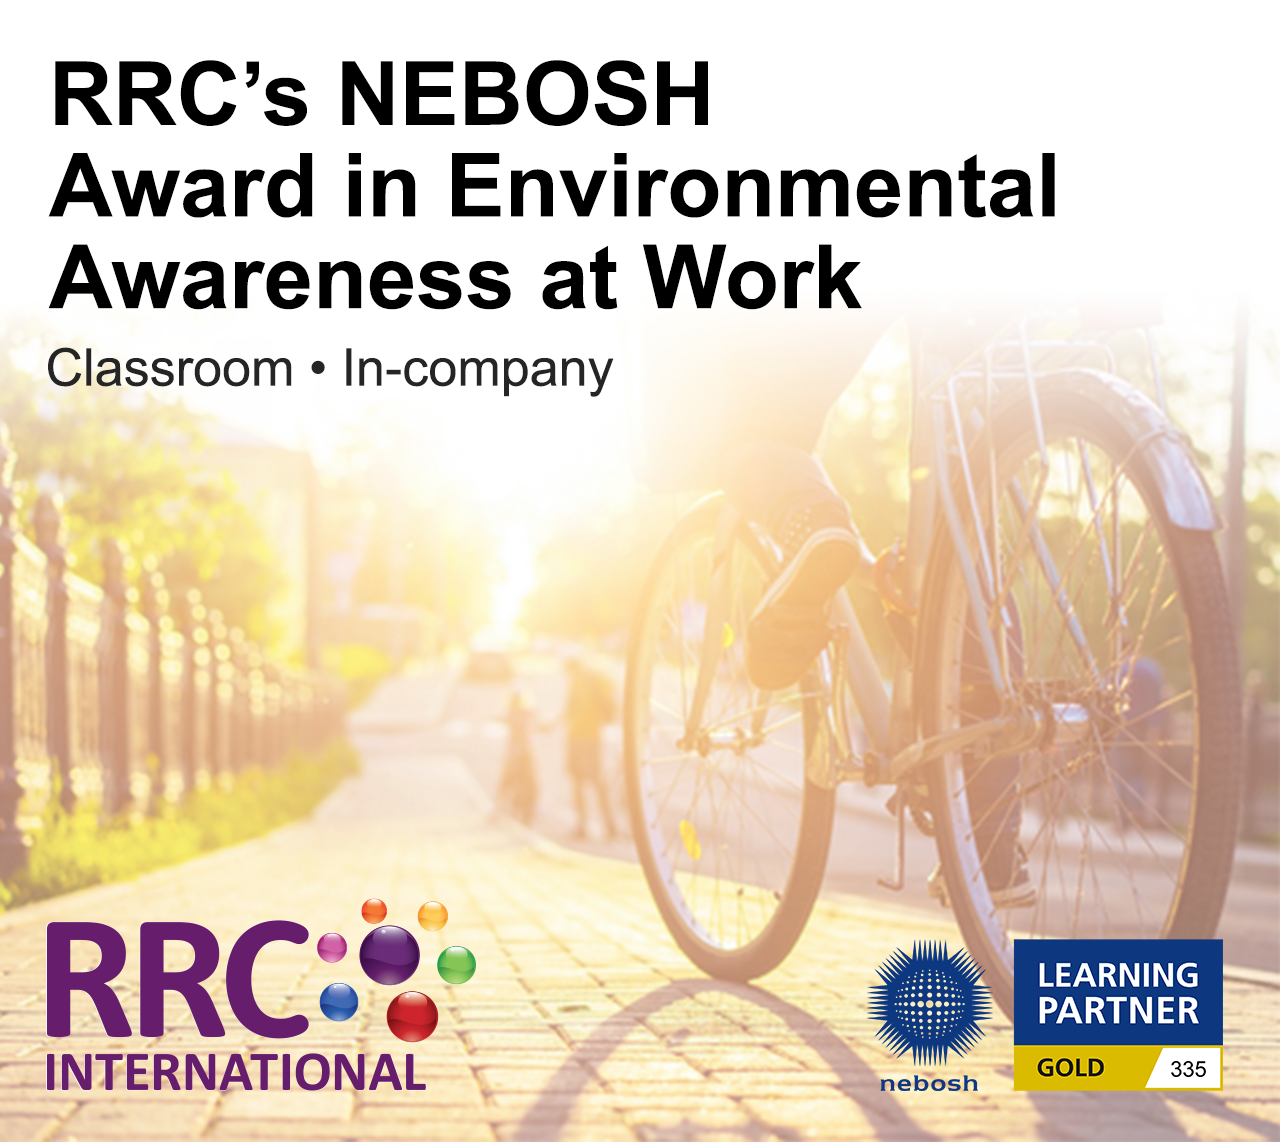 RRC's NEBOSH Award in Environmental Awareness at Work